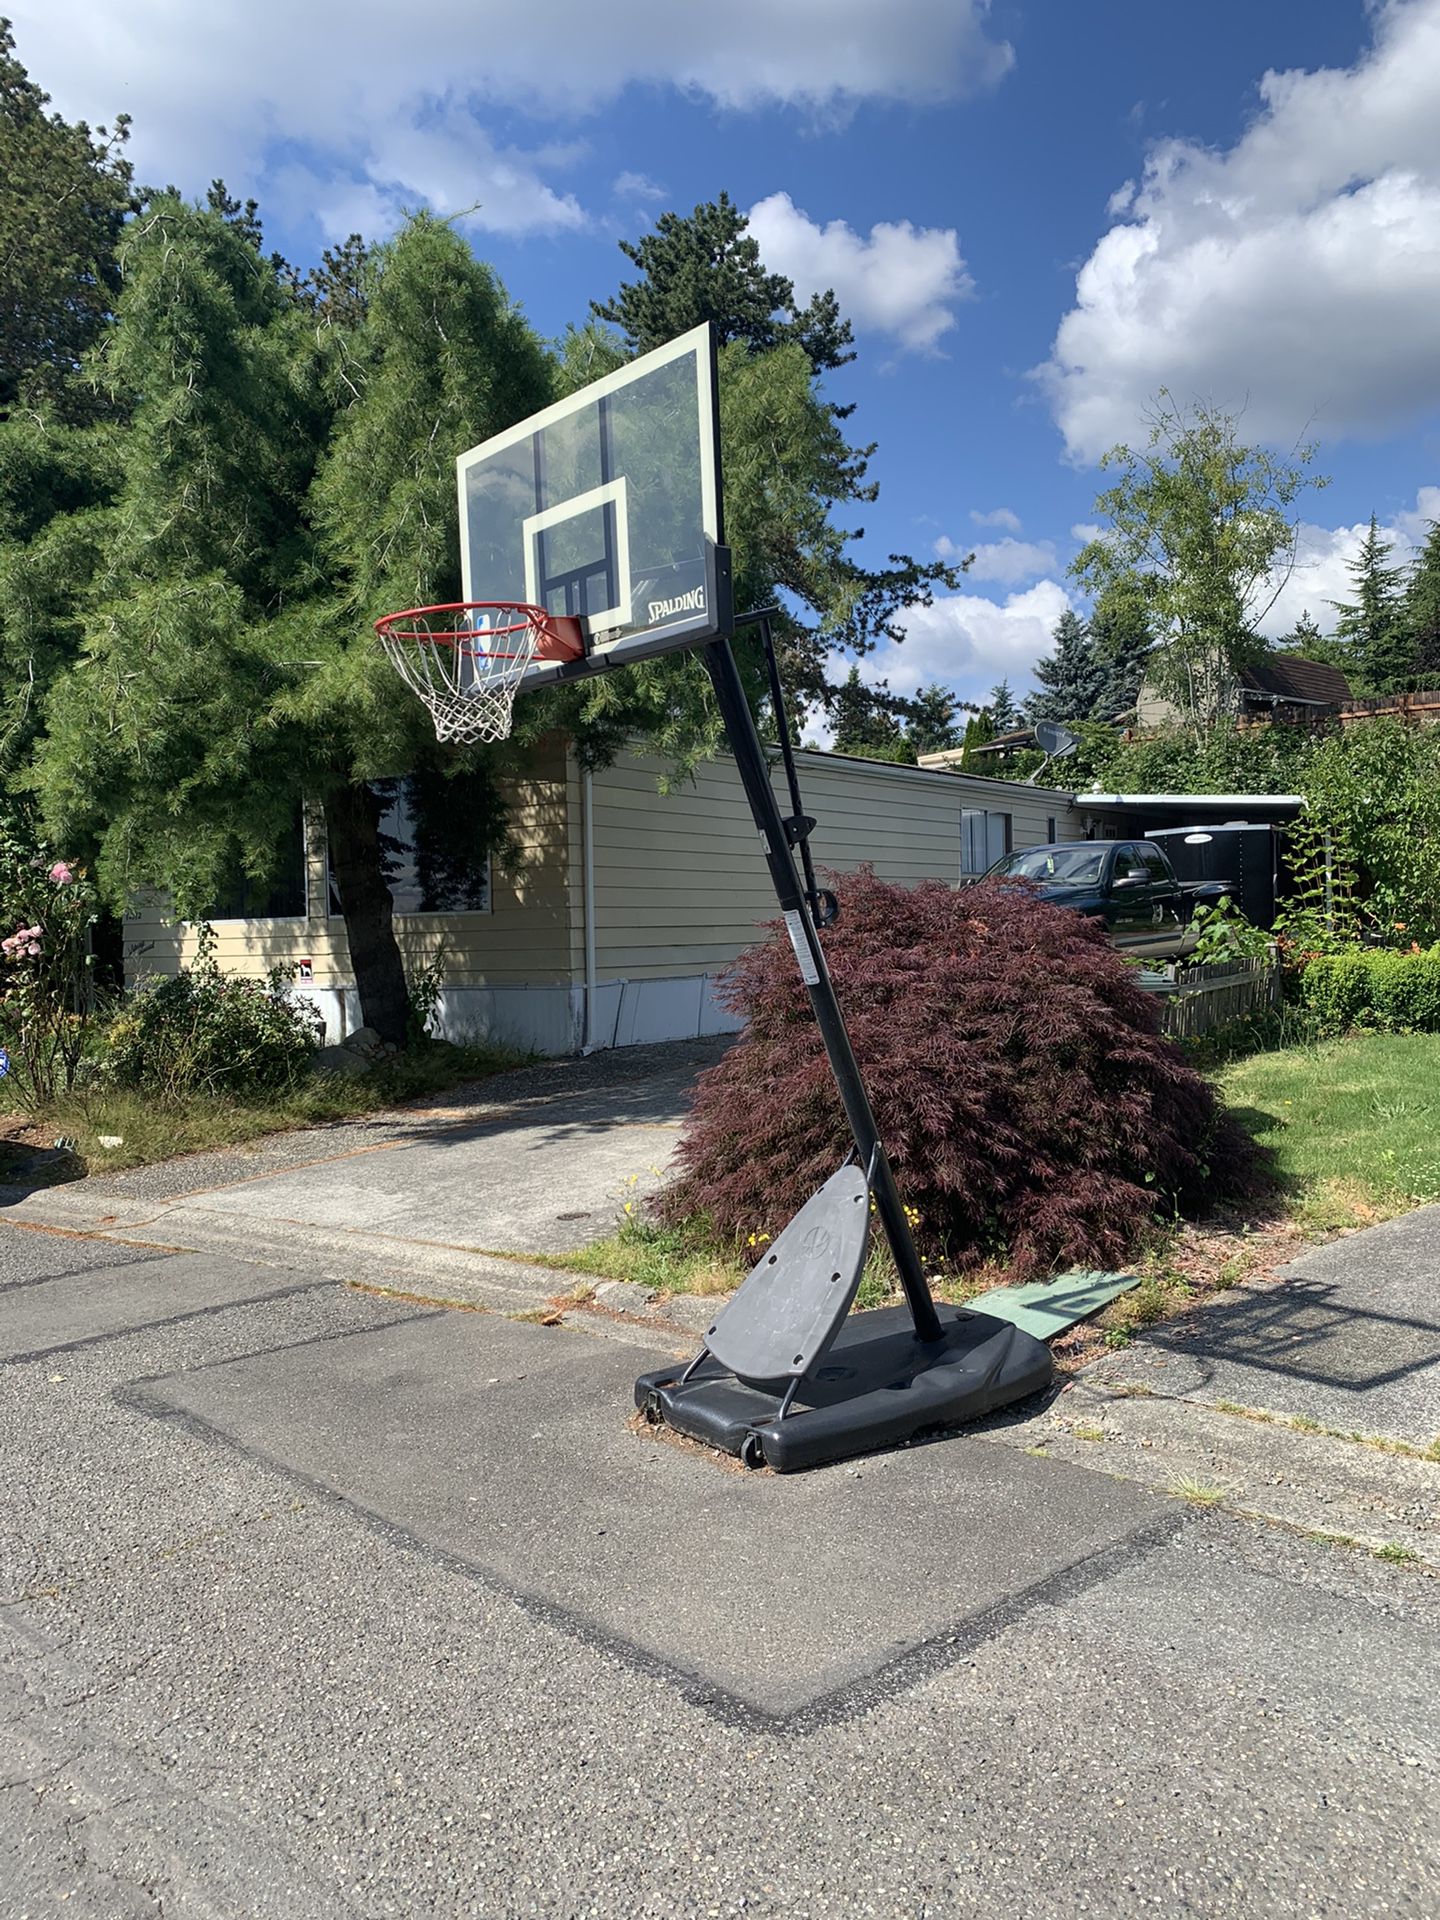 10ft adjustable basketball hoop